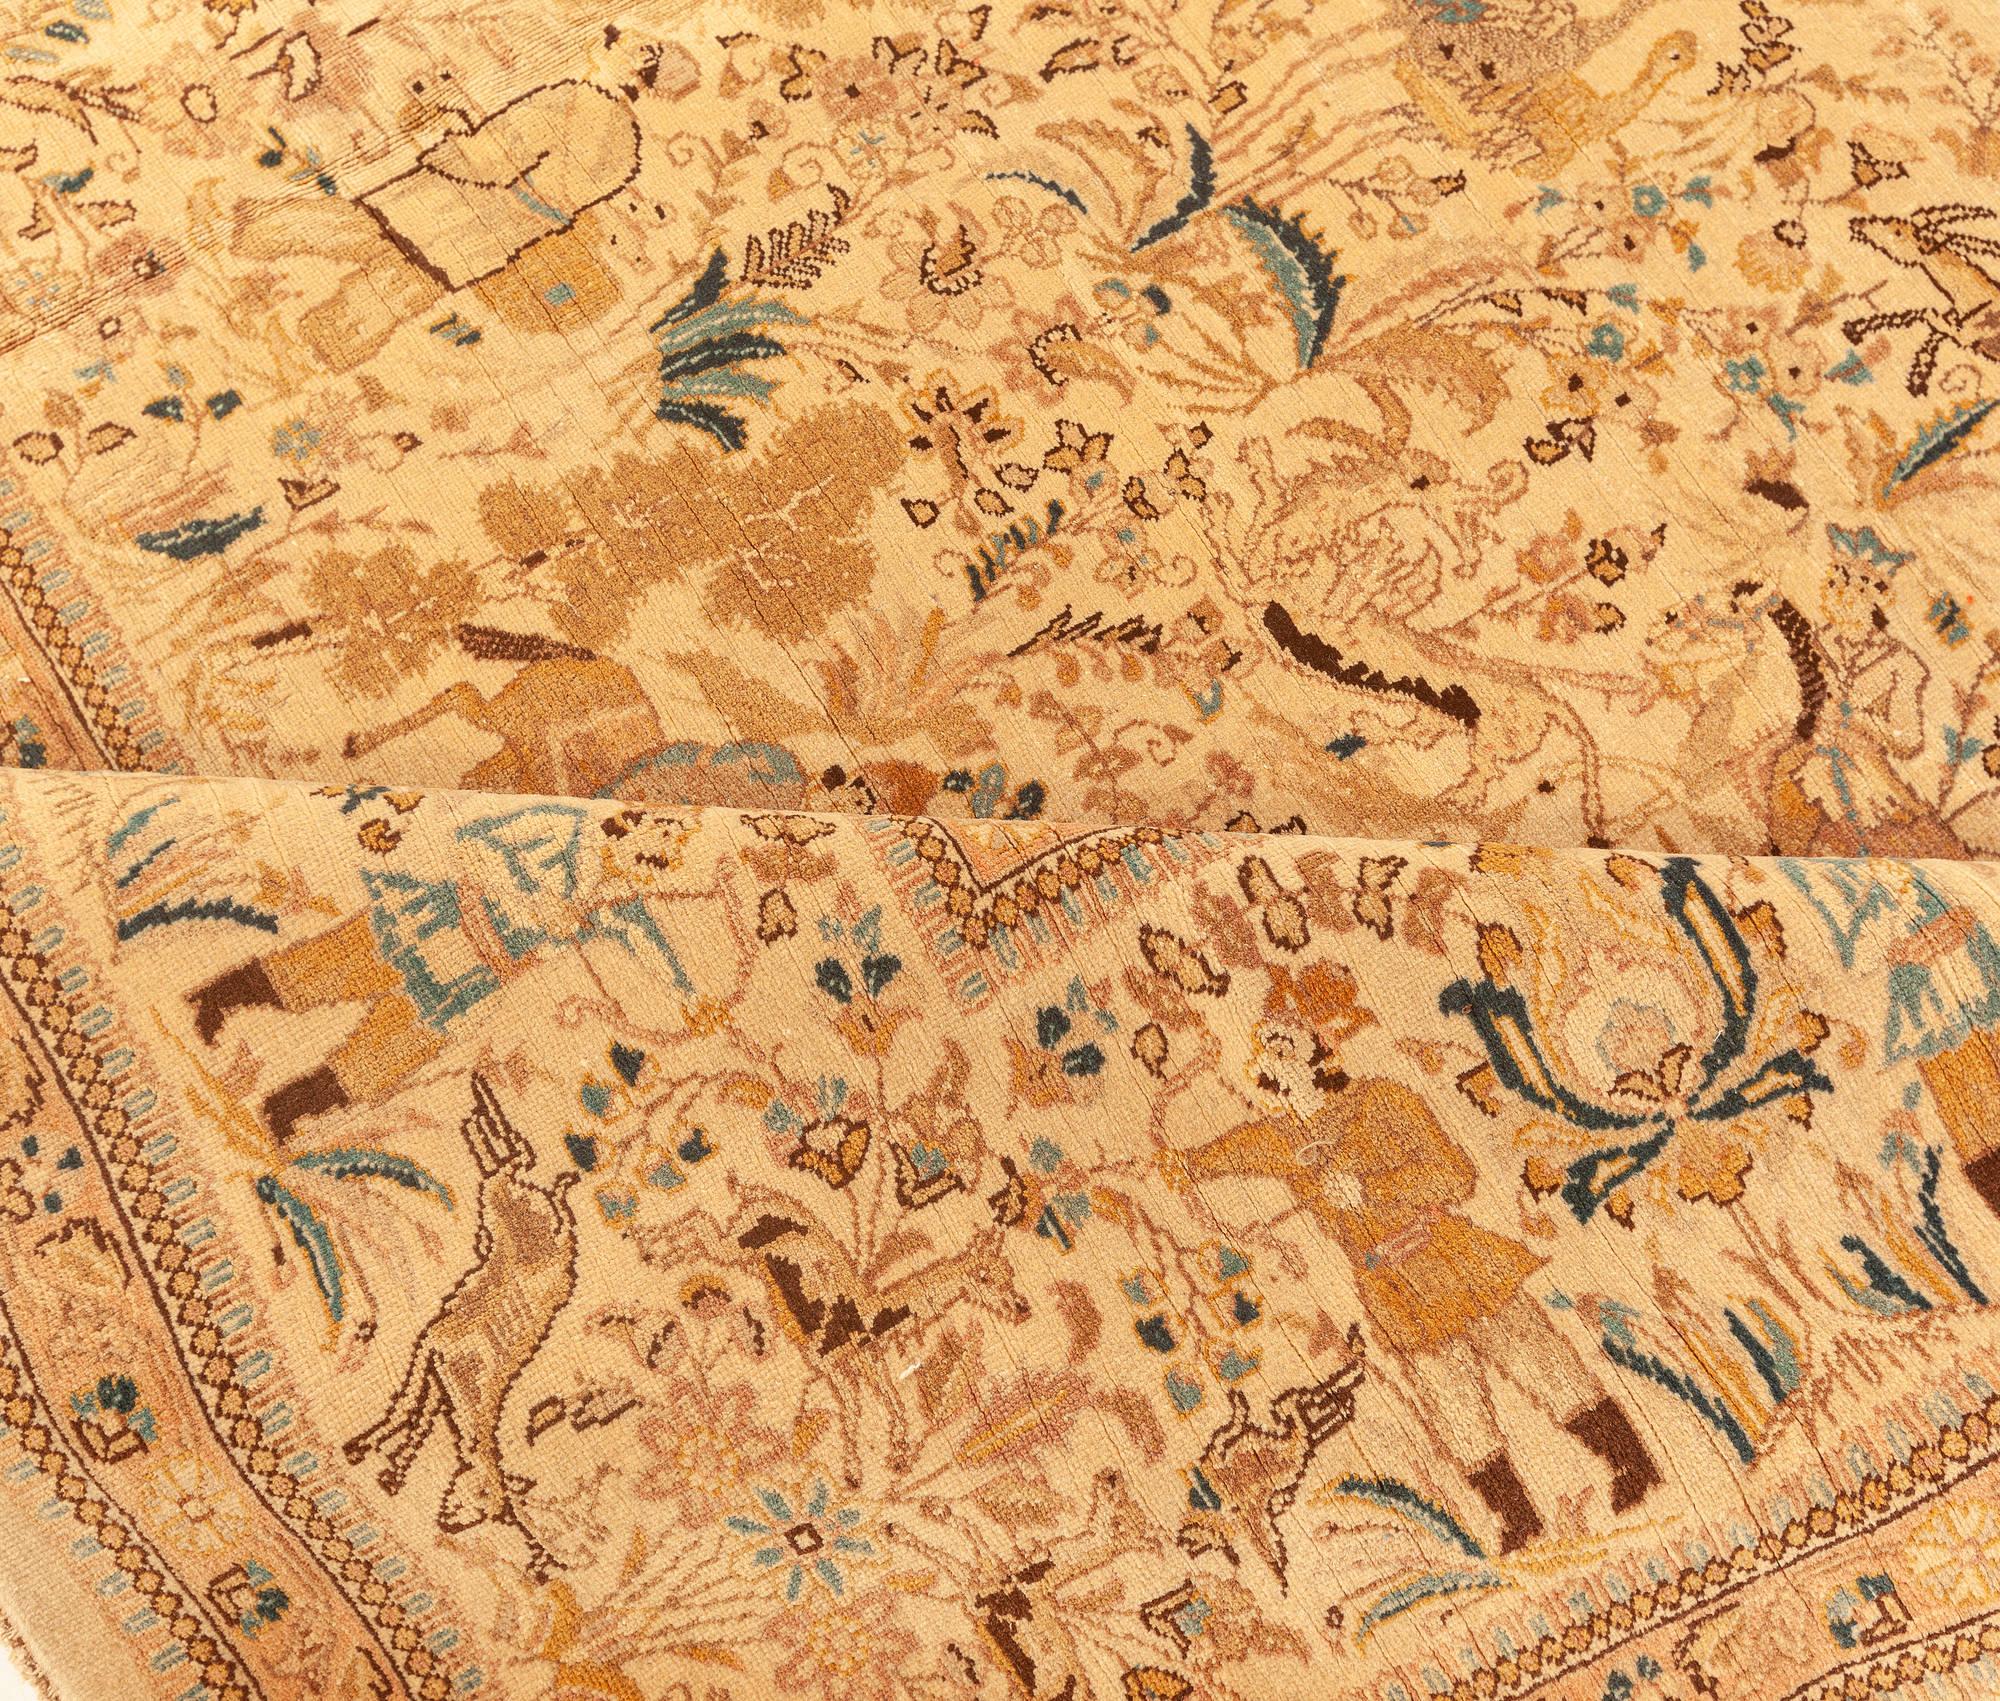 Fine Antique Persian Tabriz Handmade Wool Rug
Size: 13'6